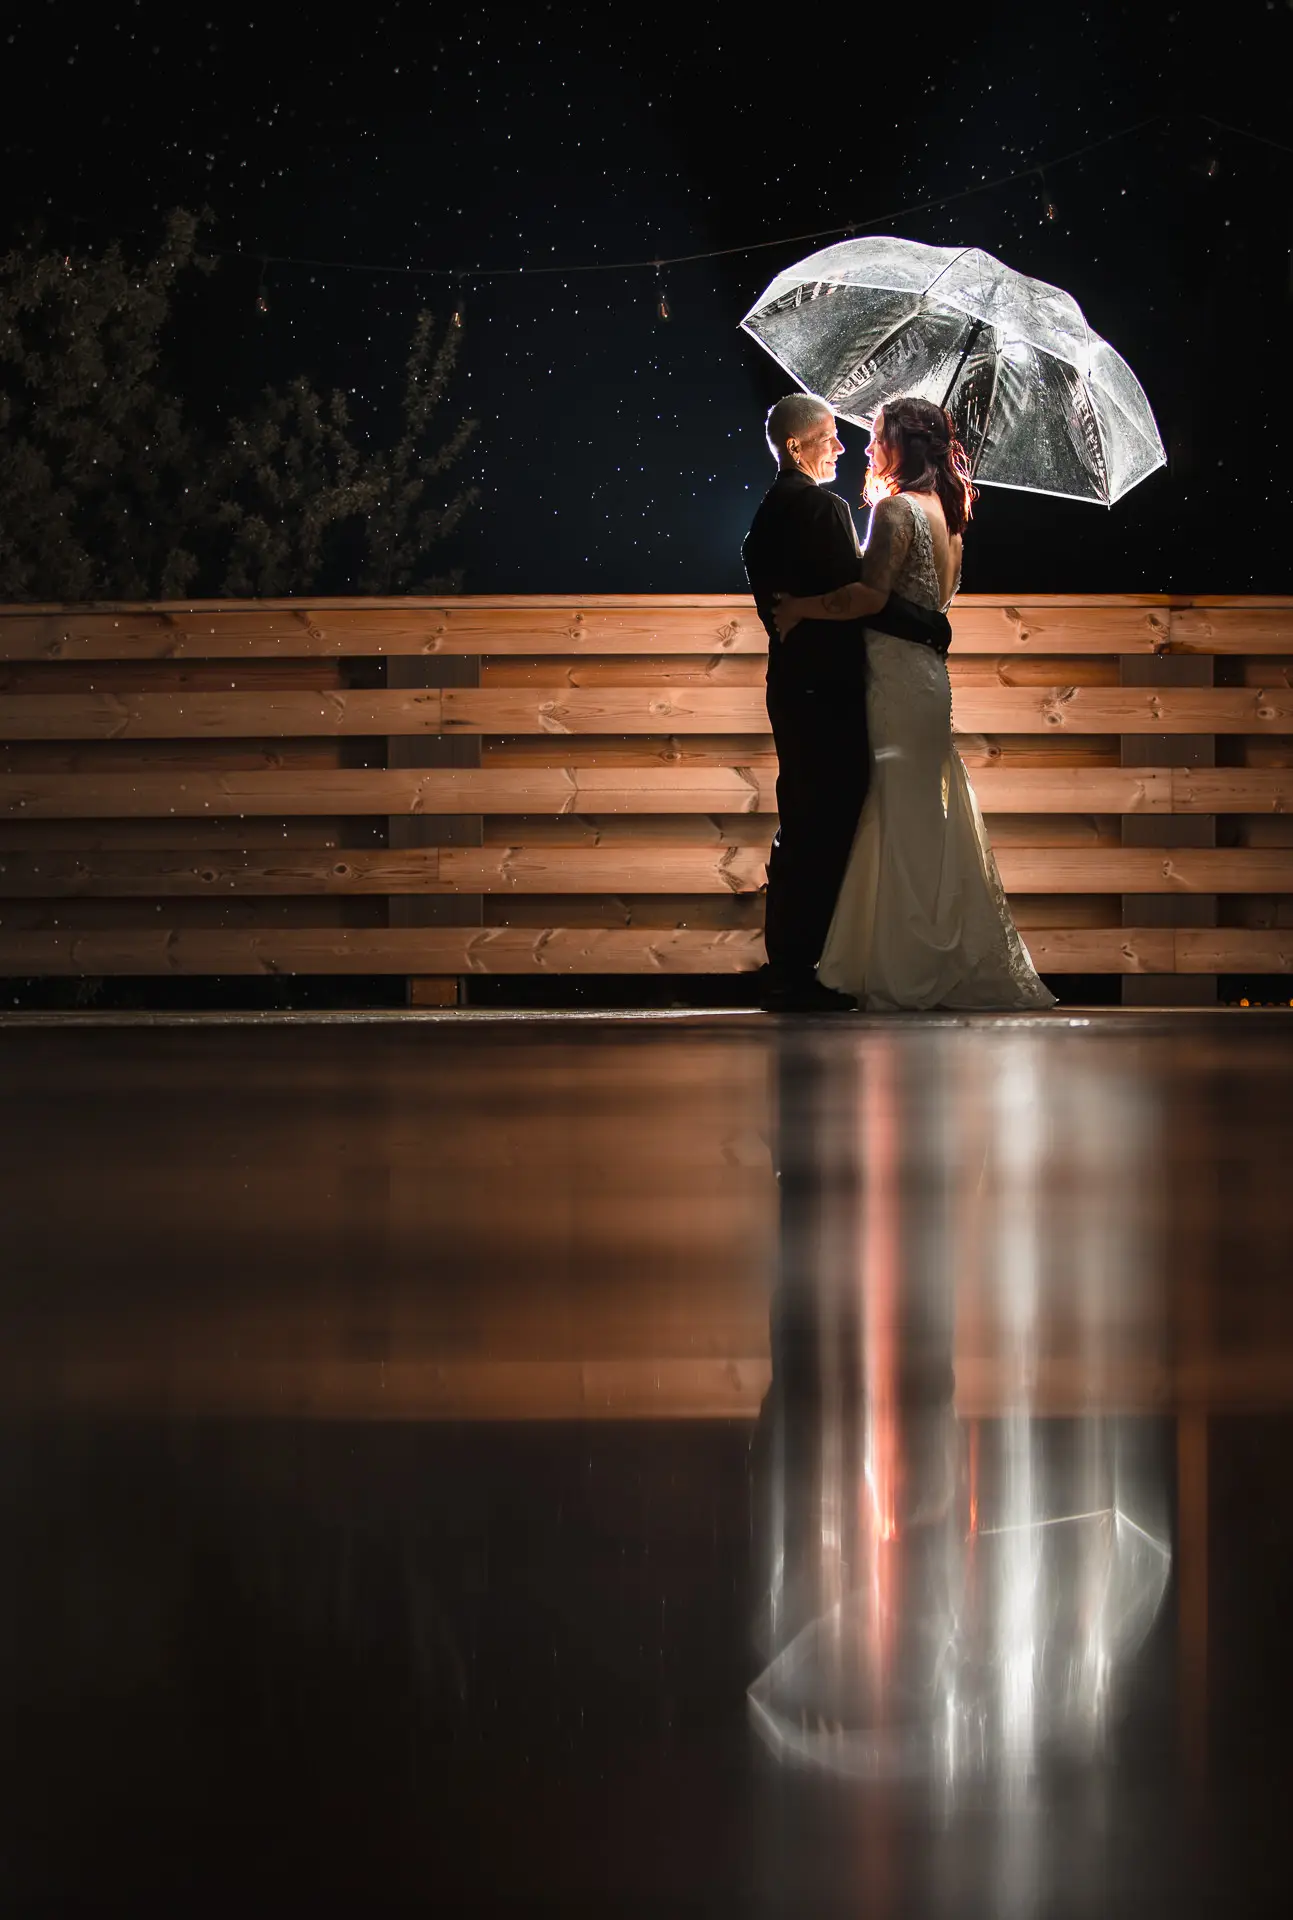 Two Colorado brides hugging in the rain withe an umbrella.